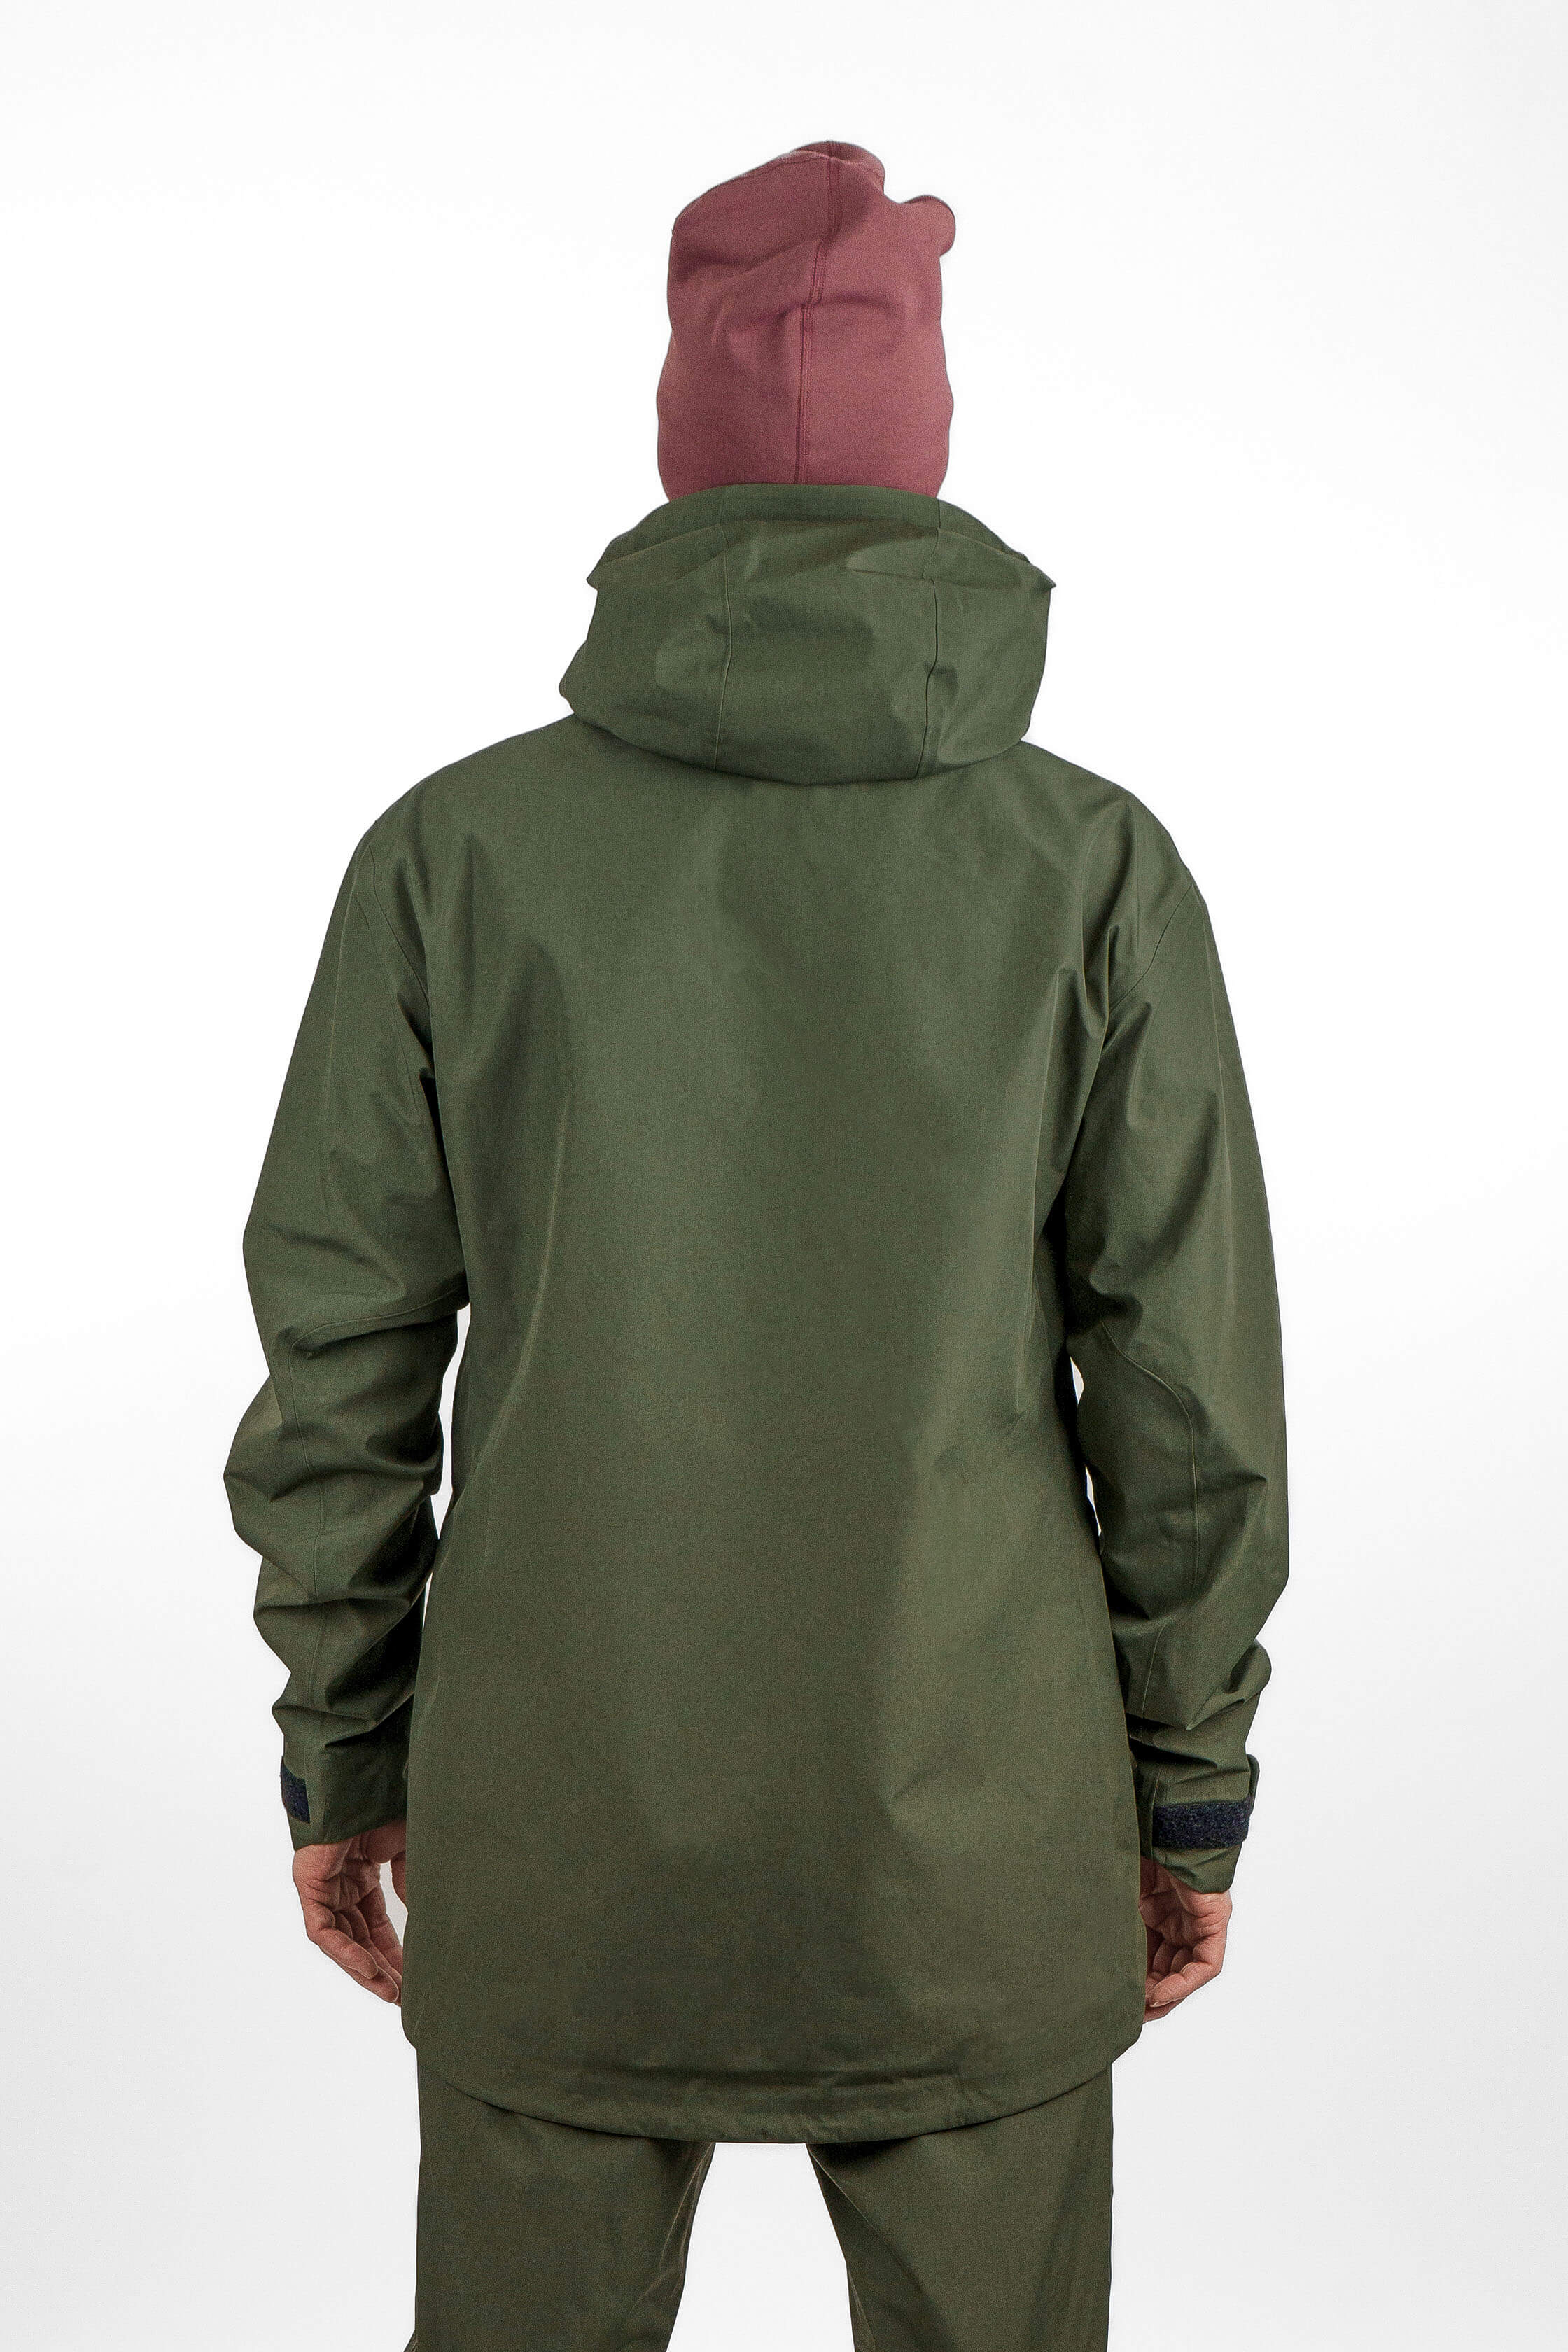 Green hardshell jacket in unisex sizing - back view of the Arctic Legacy Nuka Elements 3 layer Jacket#color_dusty-olive